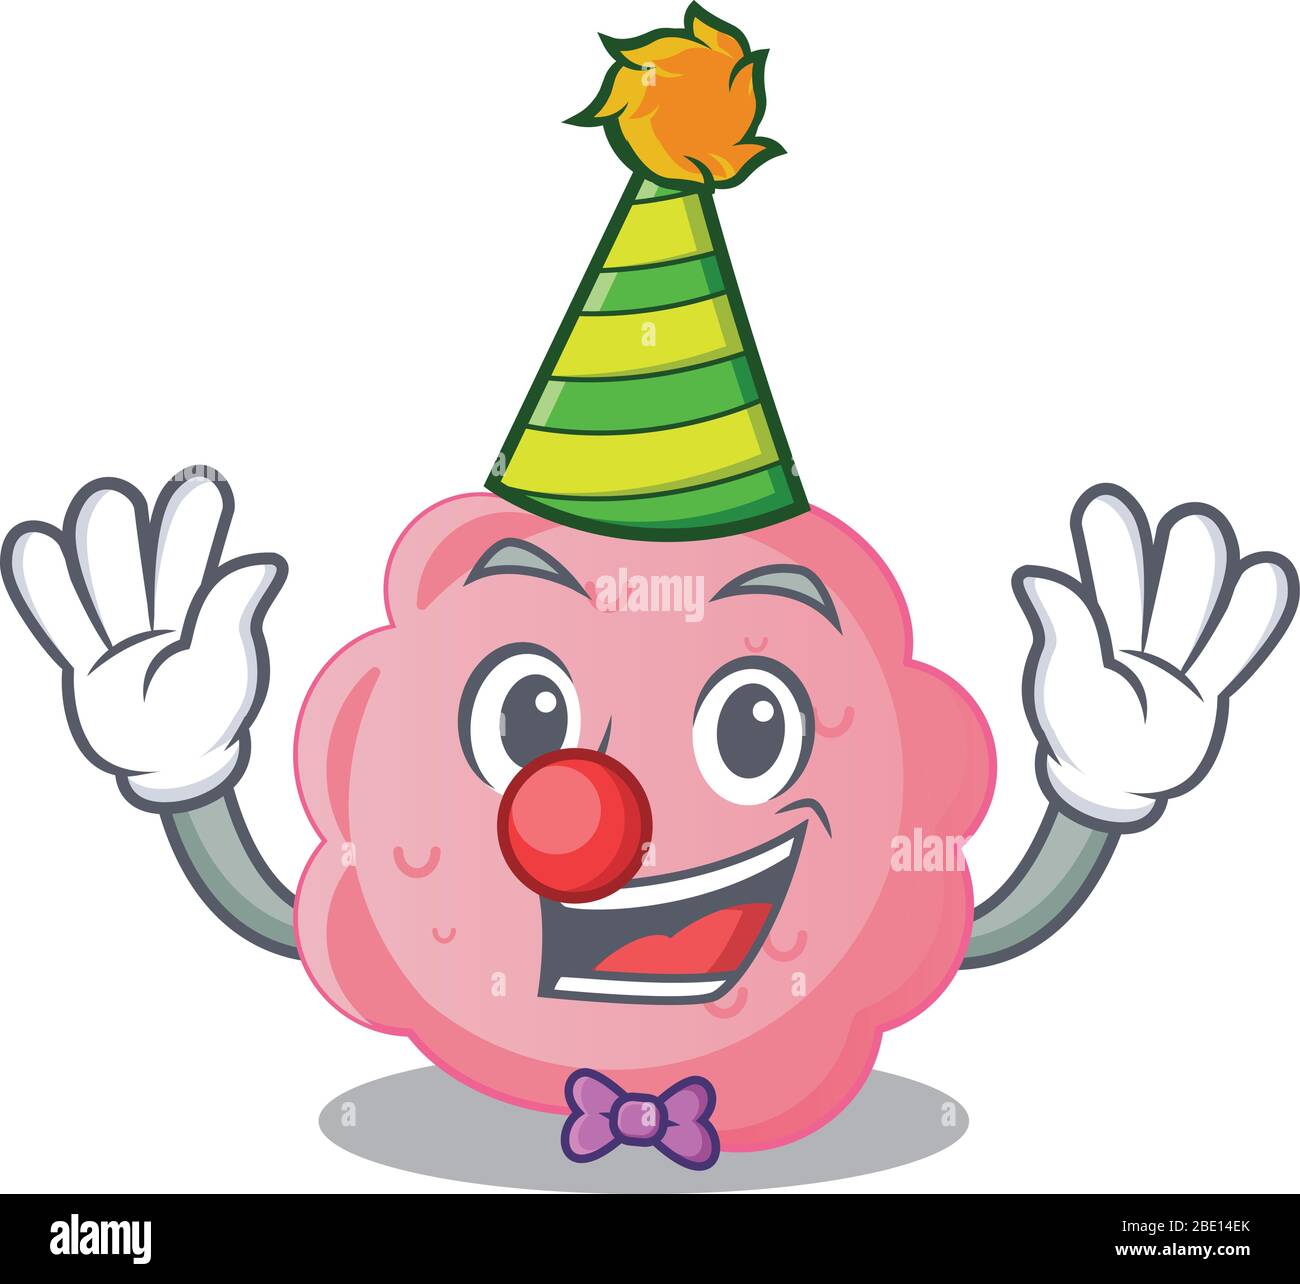 cartoon character design concept of cute clown anaplasma phagocytophilum Stock Vector